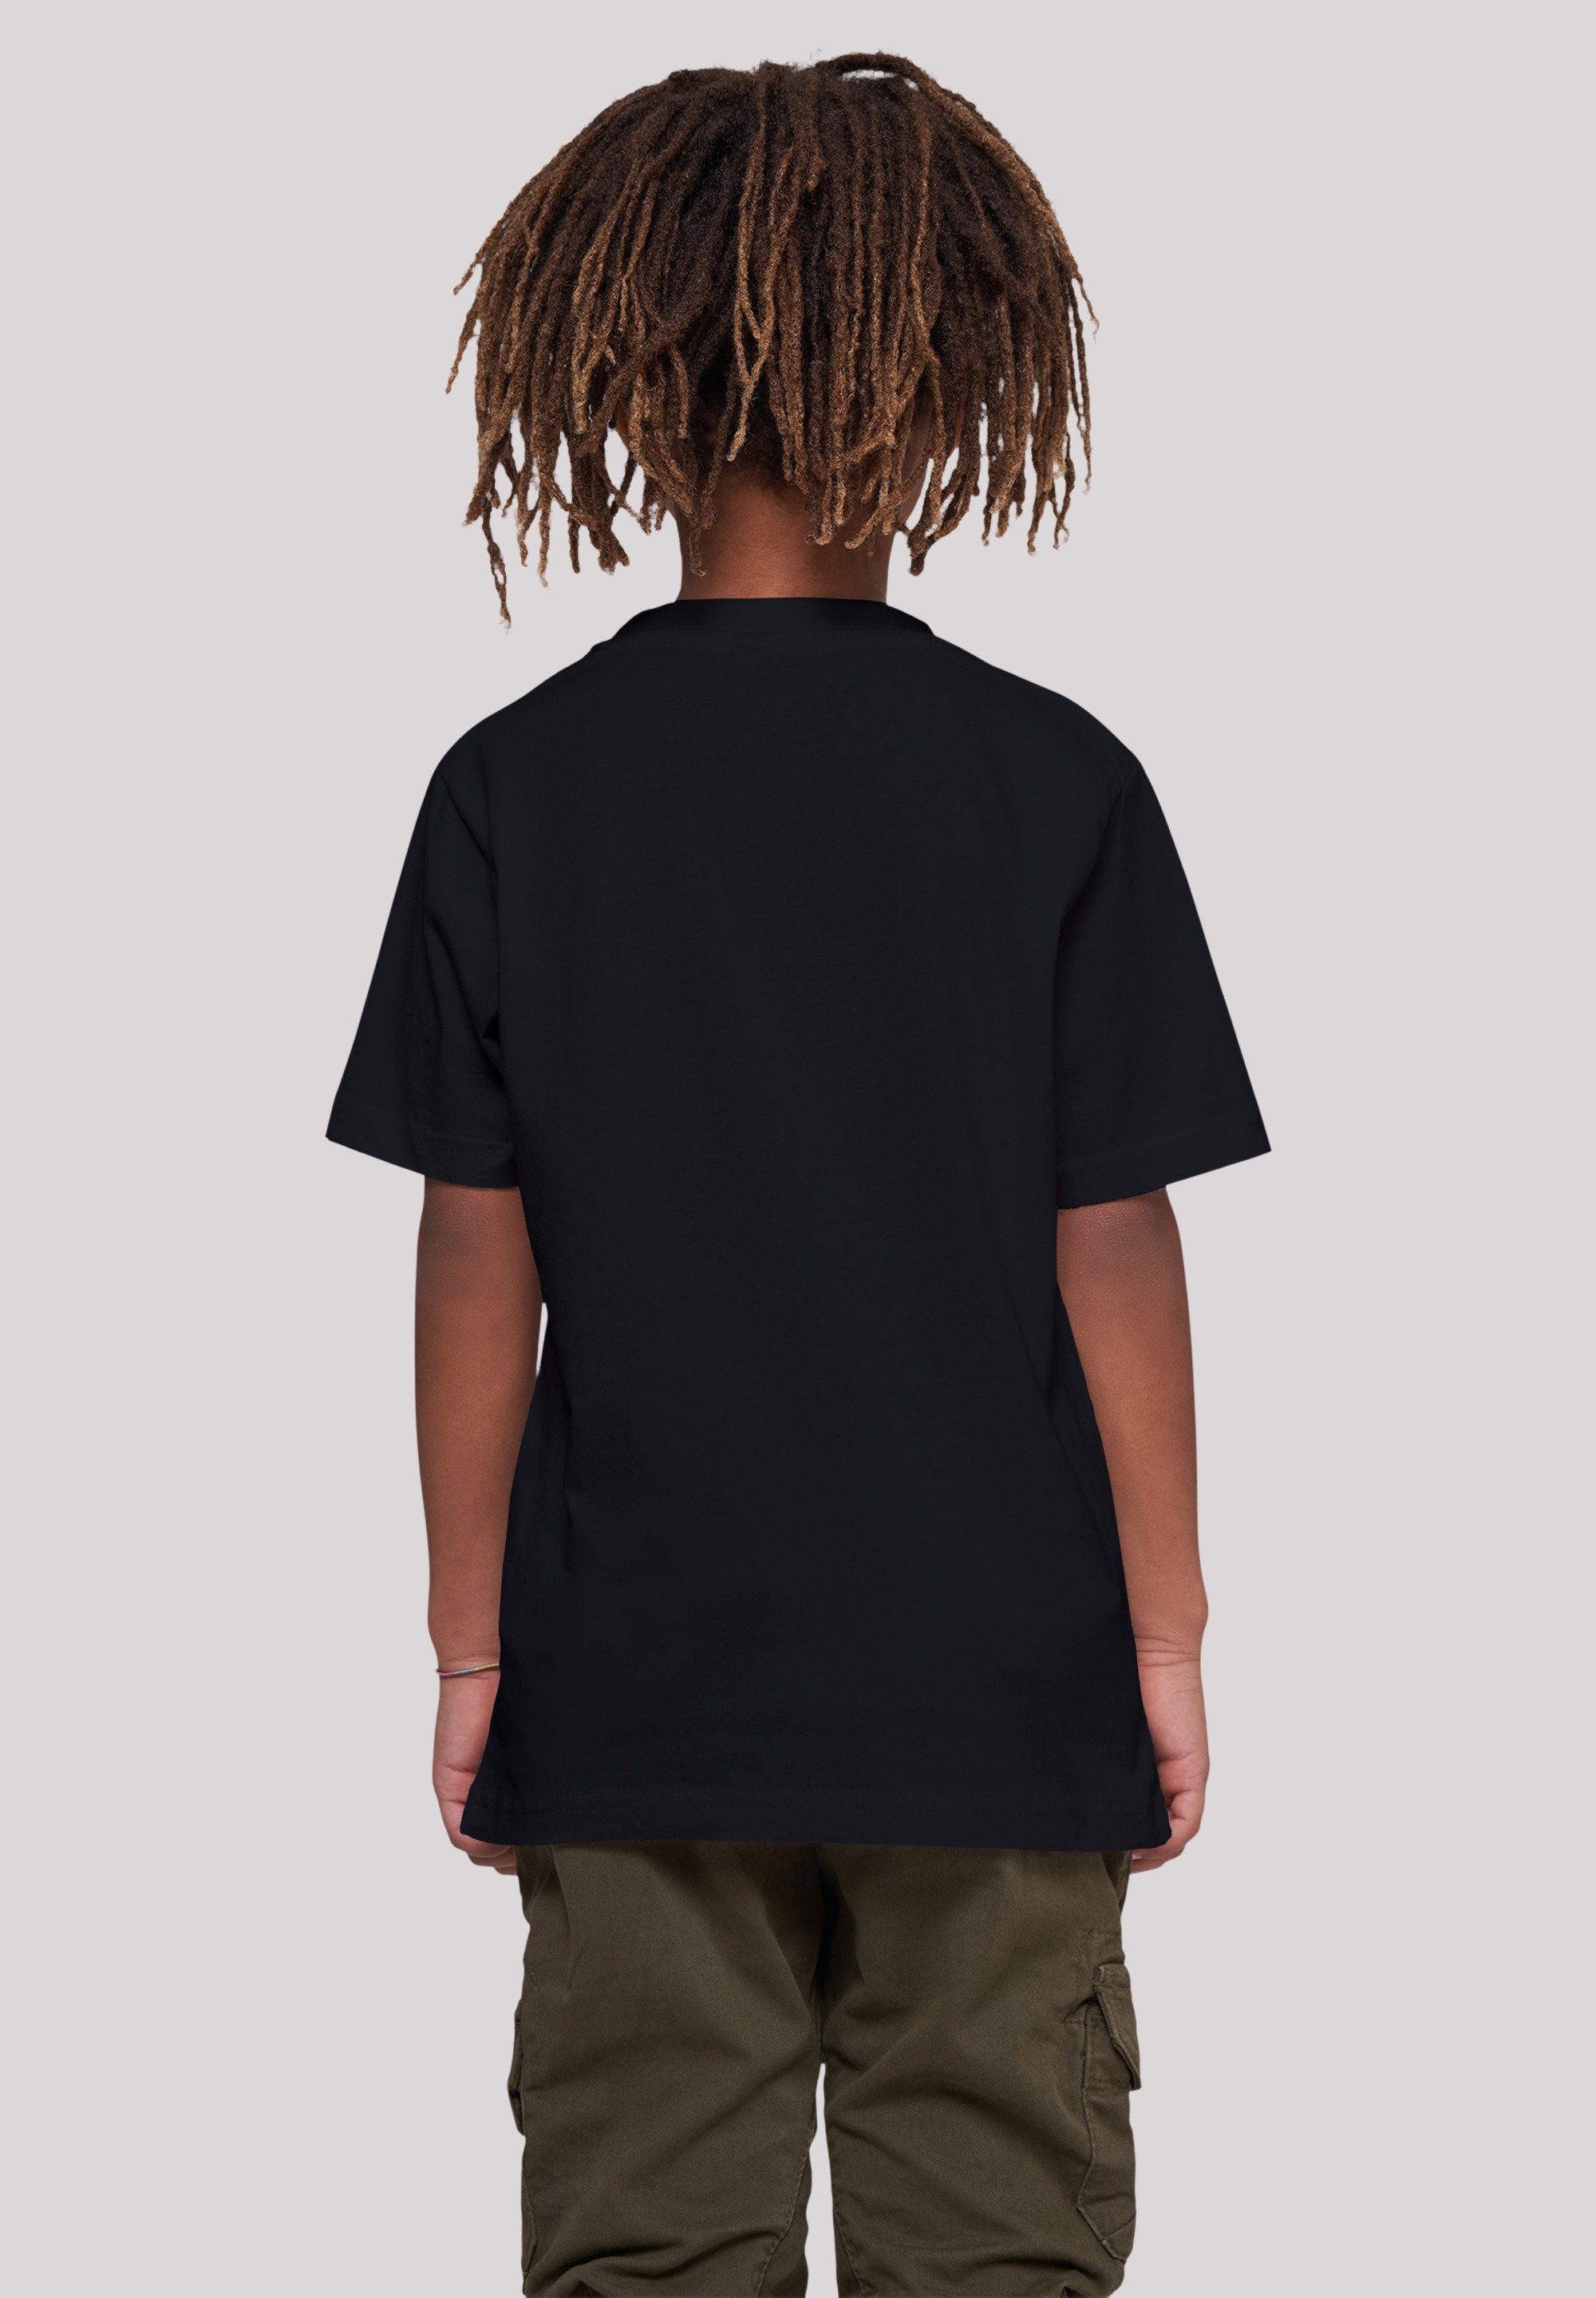 F4NT4STIC T-Shirt schwarz Print Honolulu